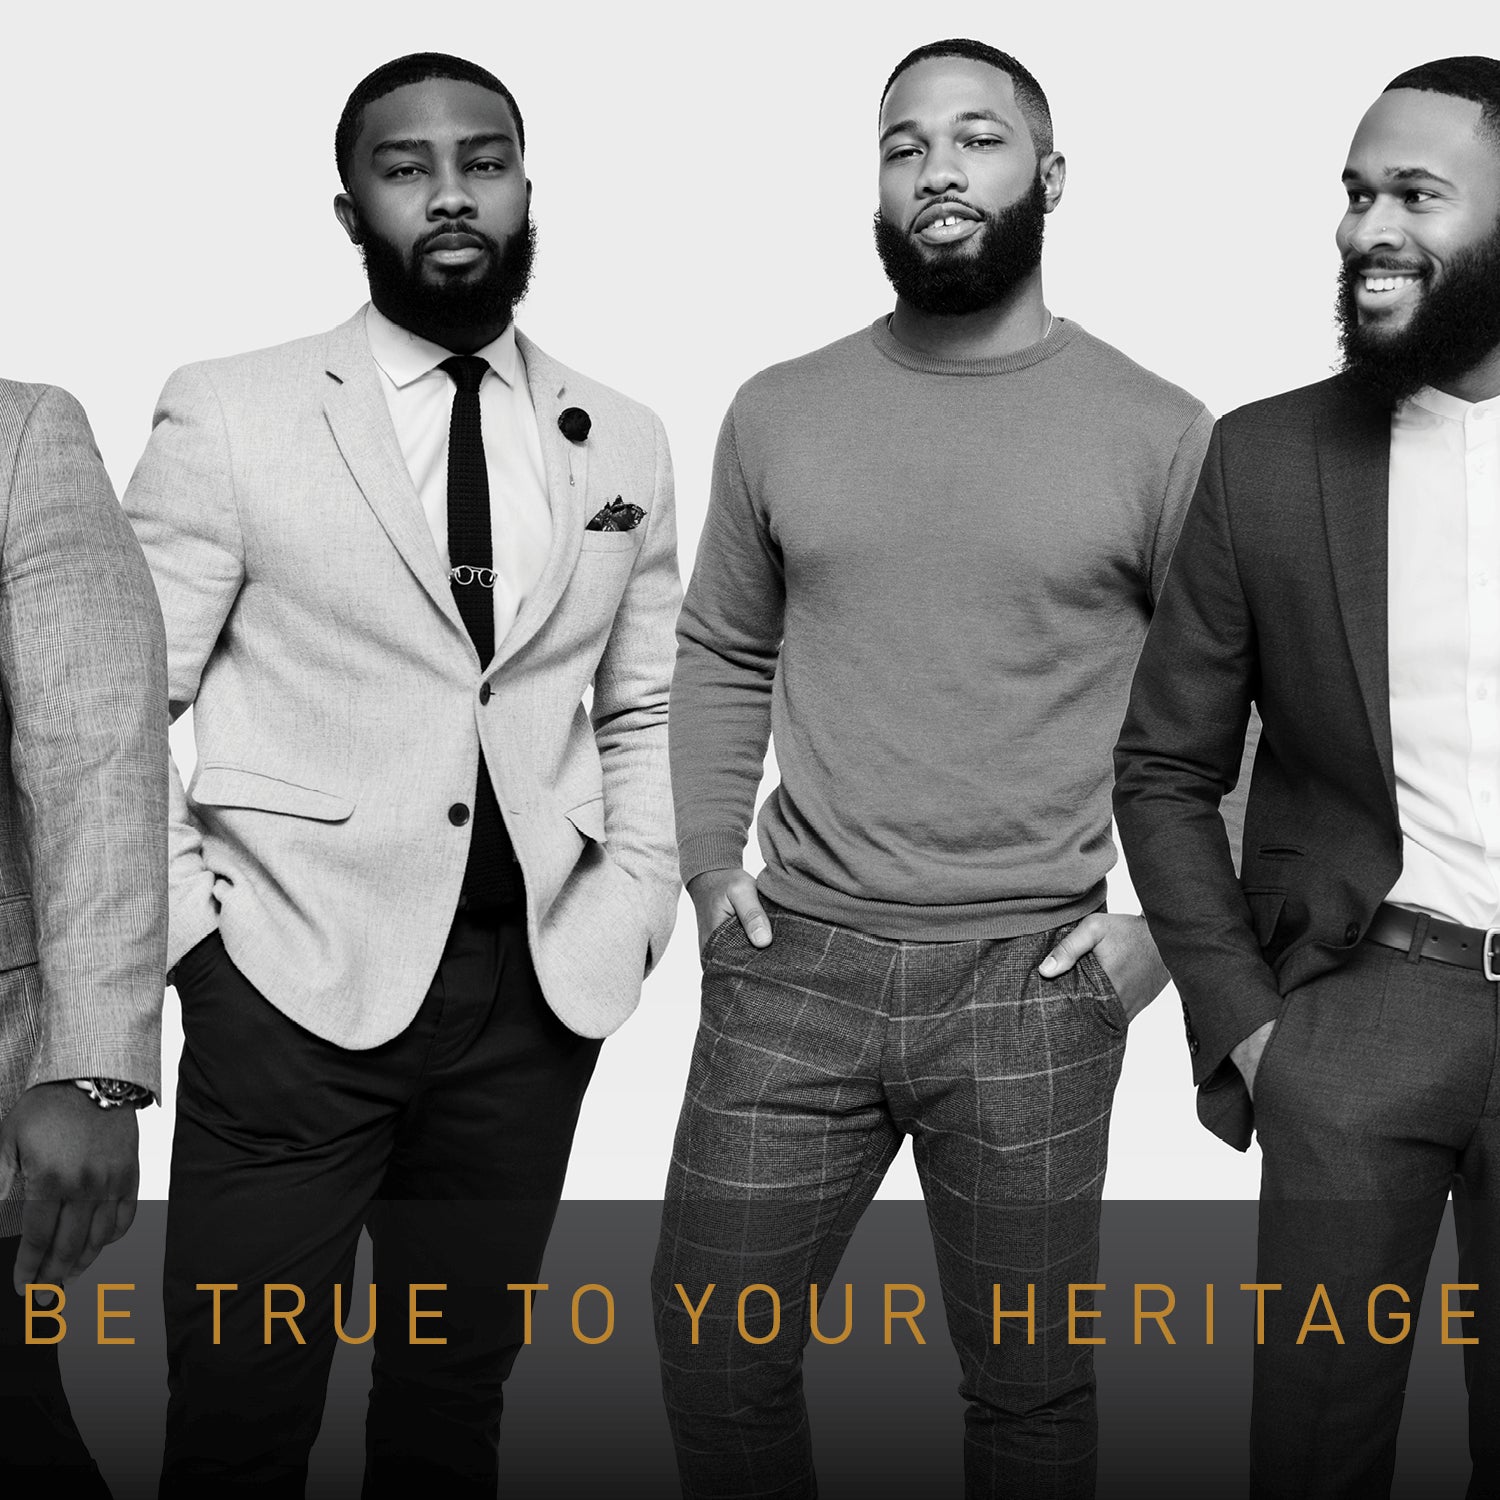 Black Fraternities: Alpha Phi Alpha Heritage